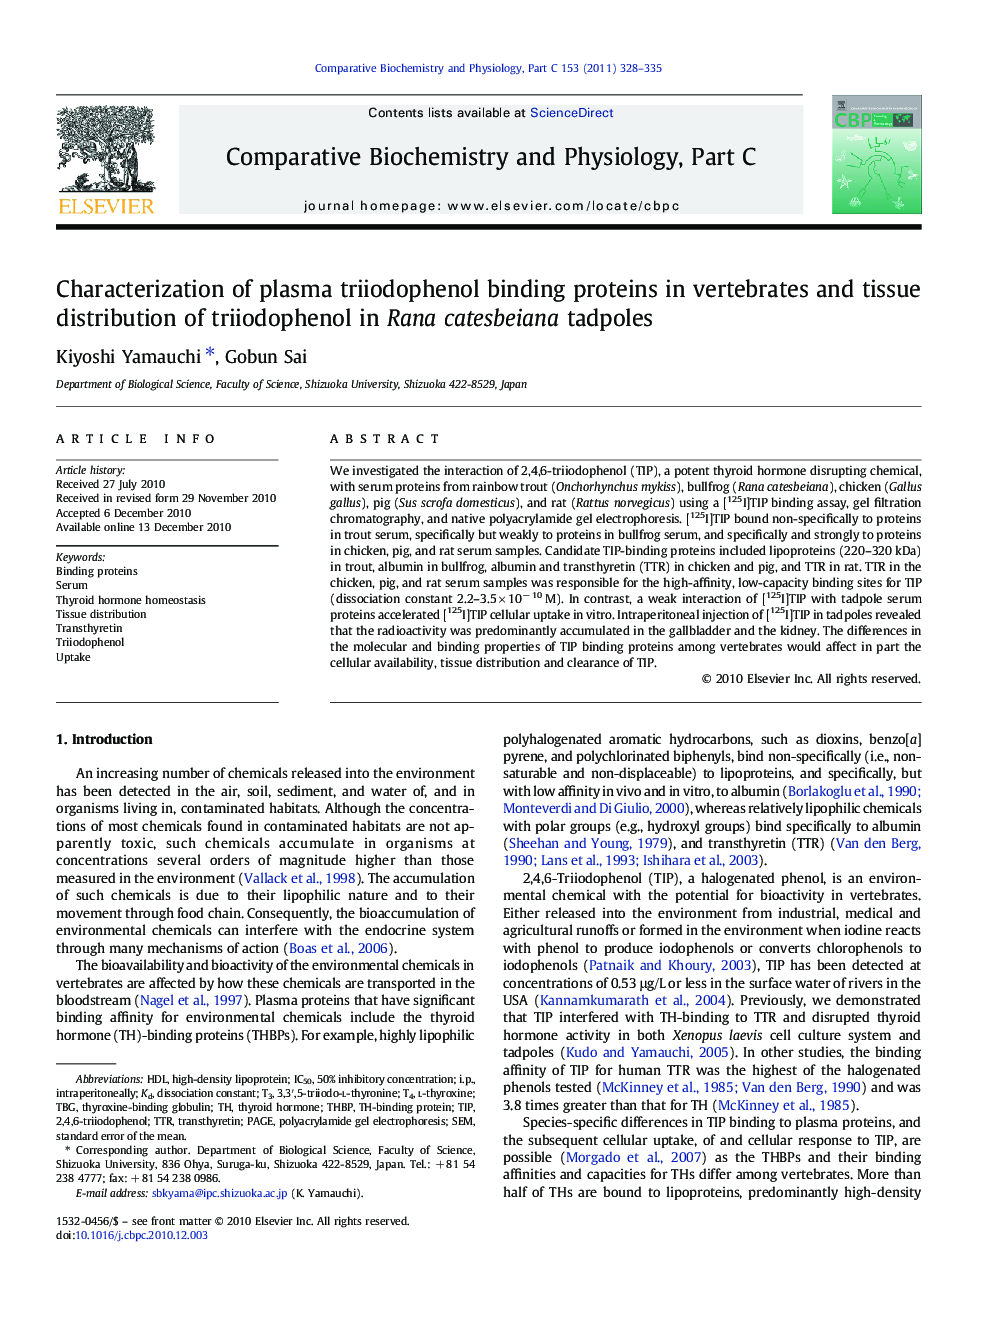 Characterization of plasma triiodophenol binding proteins in vertebrates and tissue distribution of triiodophenol in Rana catesbeiana tadpoles